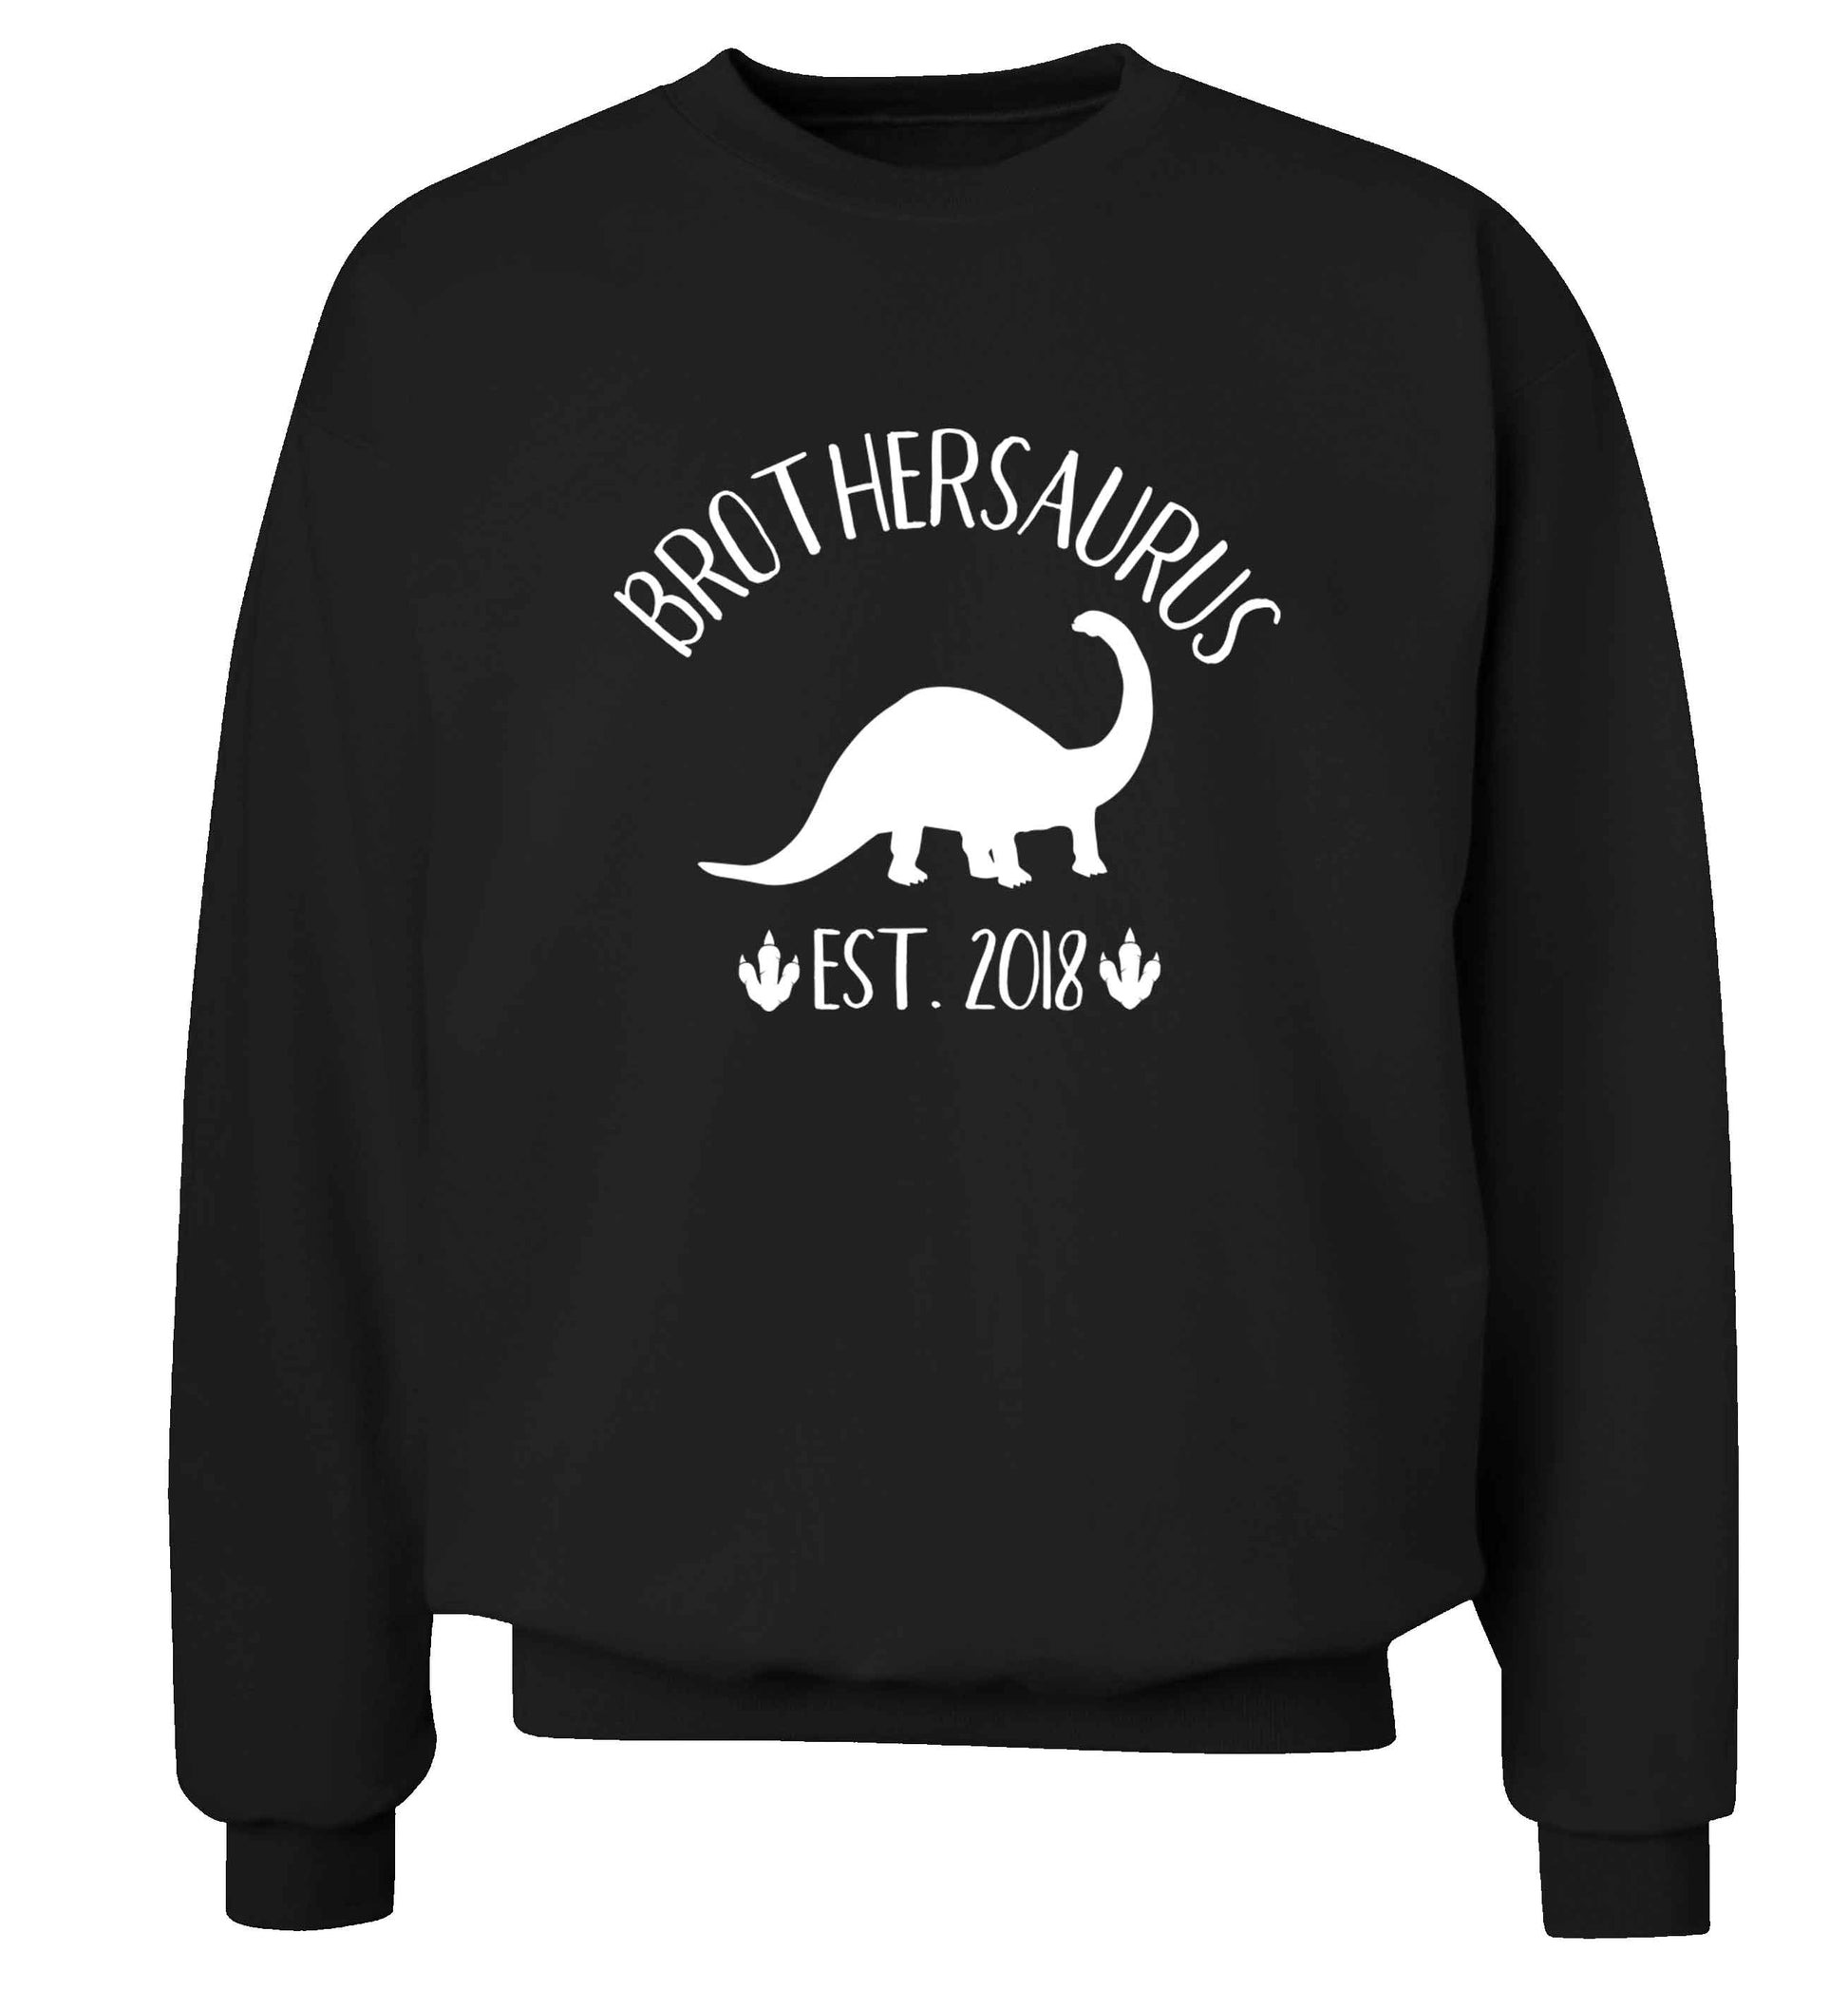 Personalised brothersaurus since (custom date) Adult's unisex black Sweater 2XL